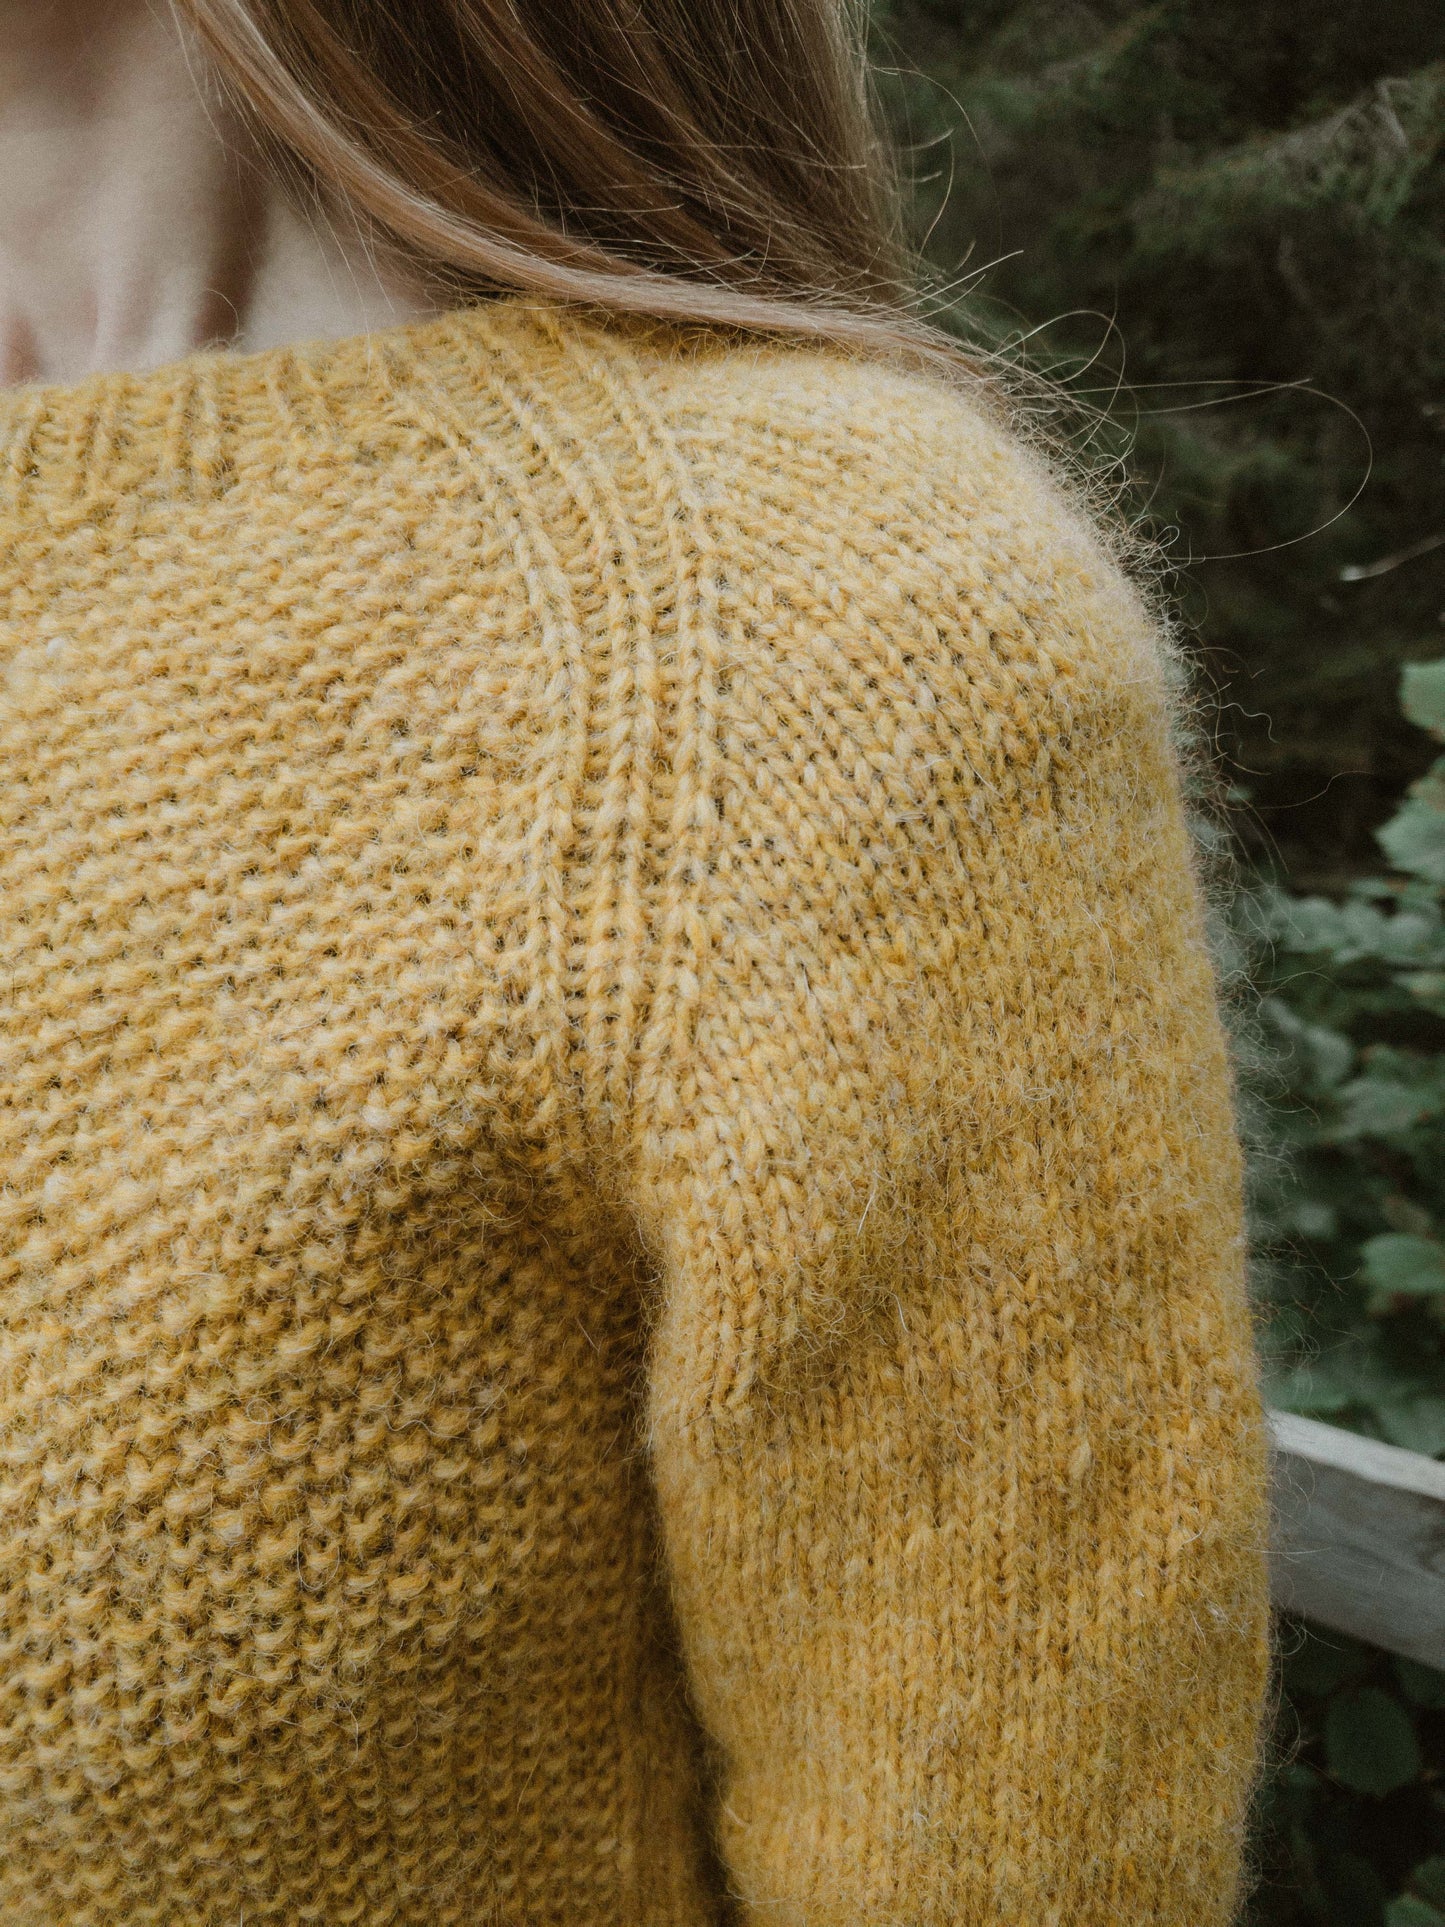 Before Fall Sweater - Modèle de Tricot